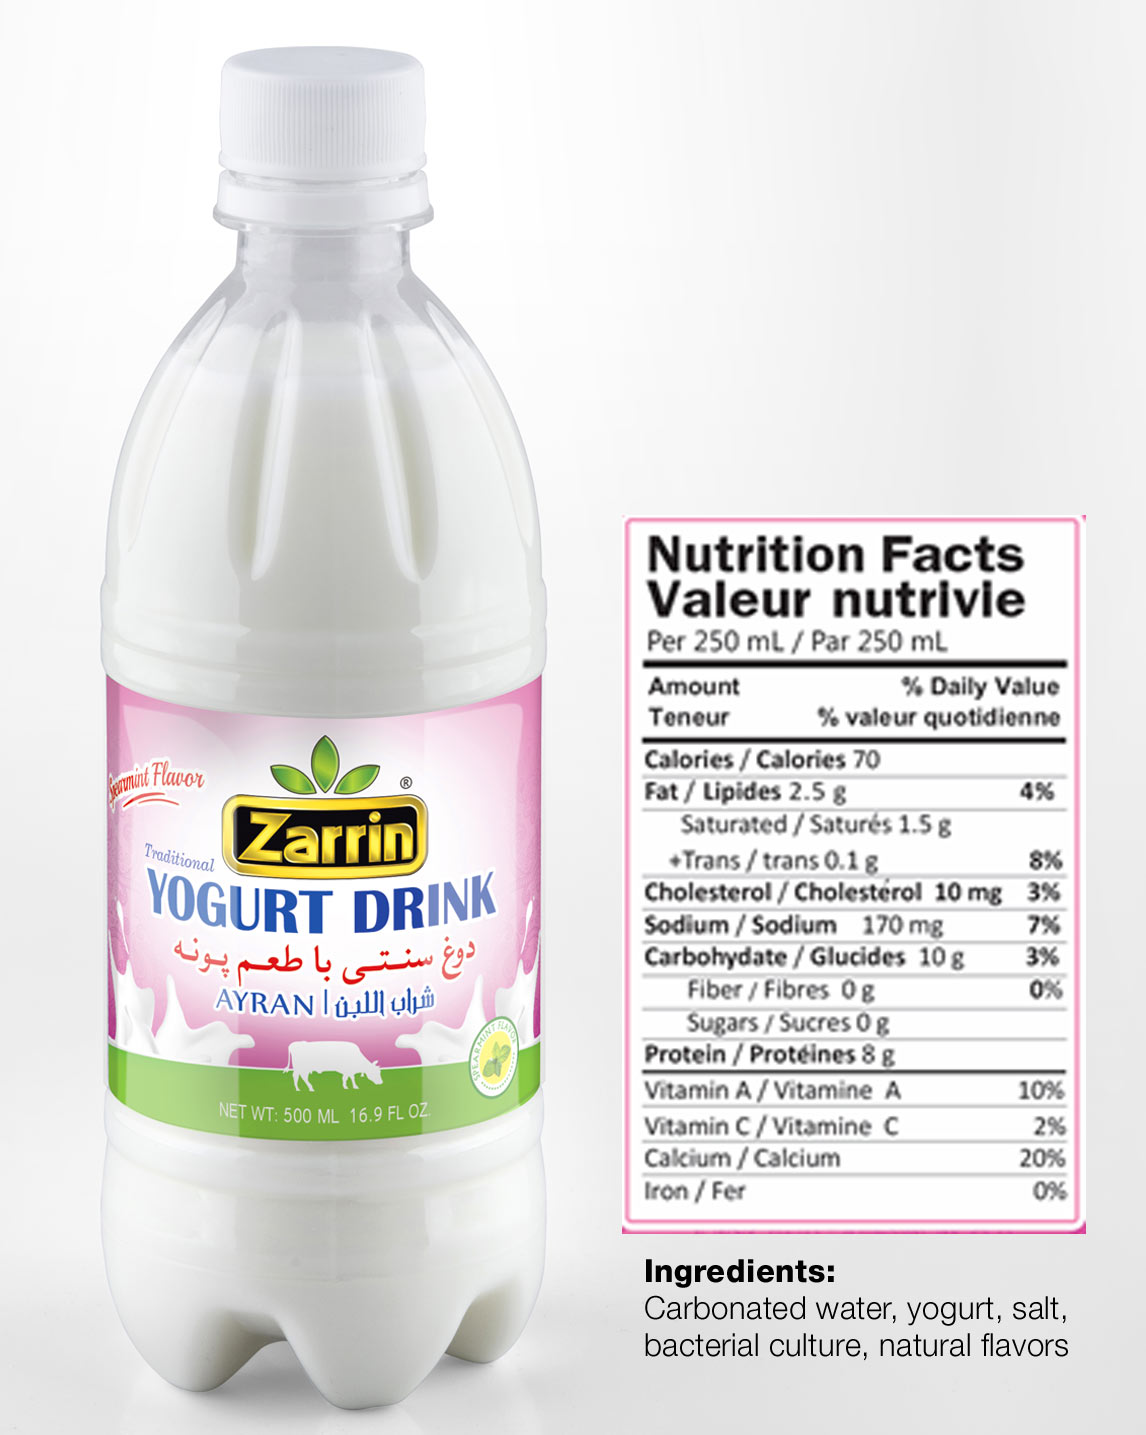 Zarrin spearmint flavor yogurt drink also called ayran.